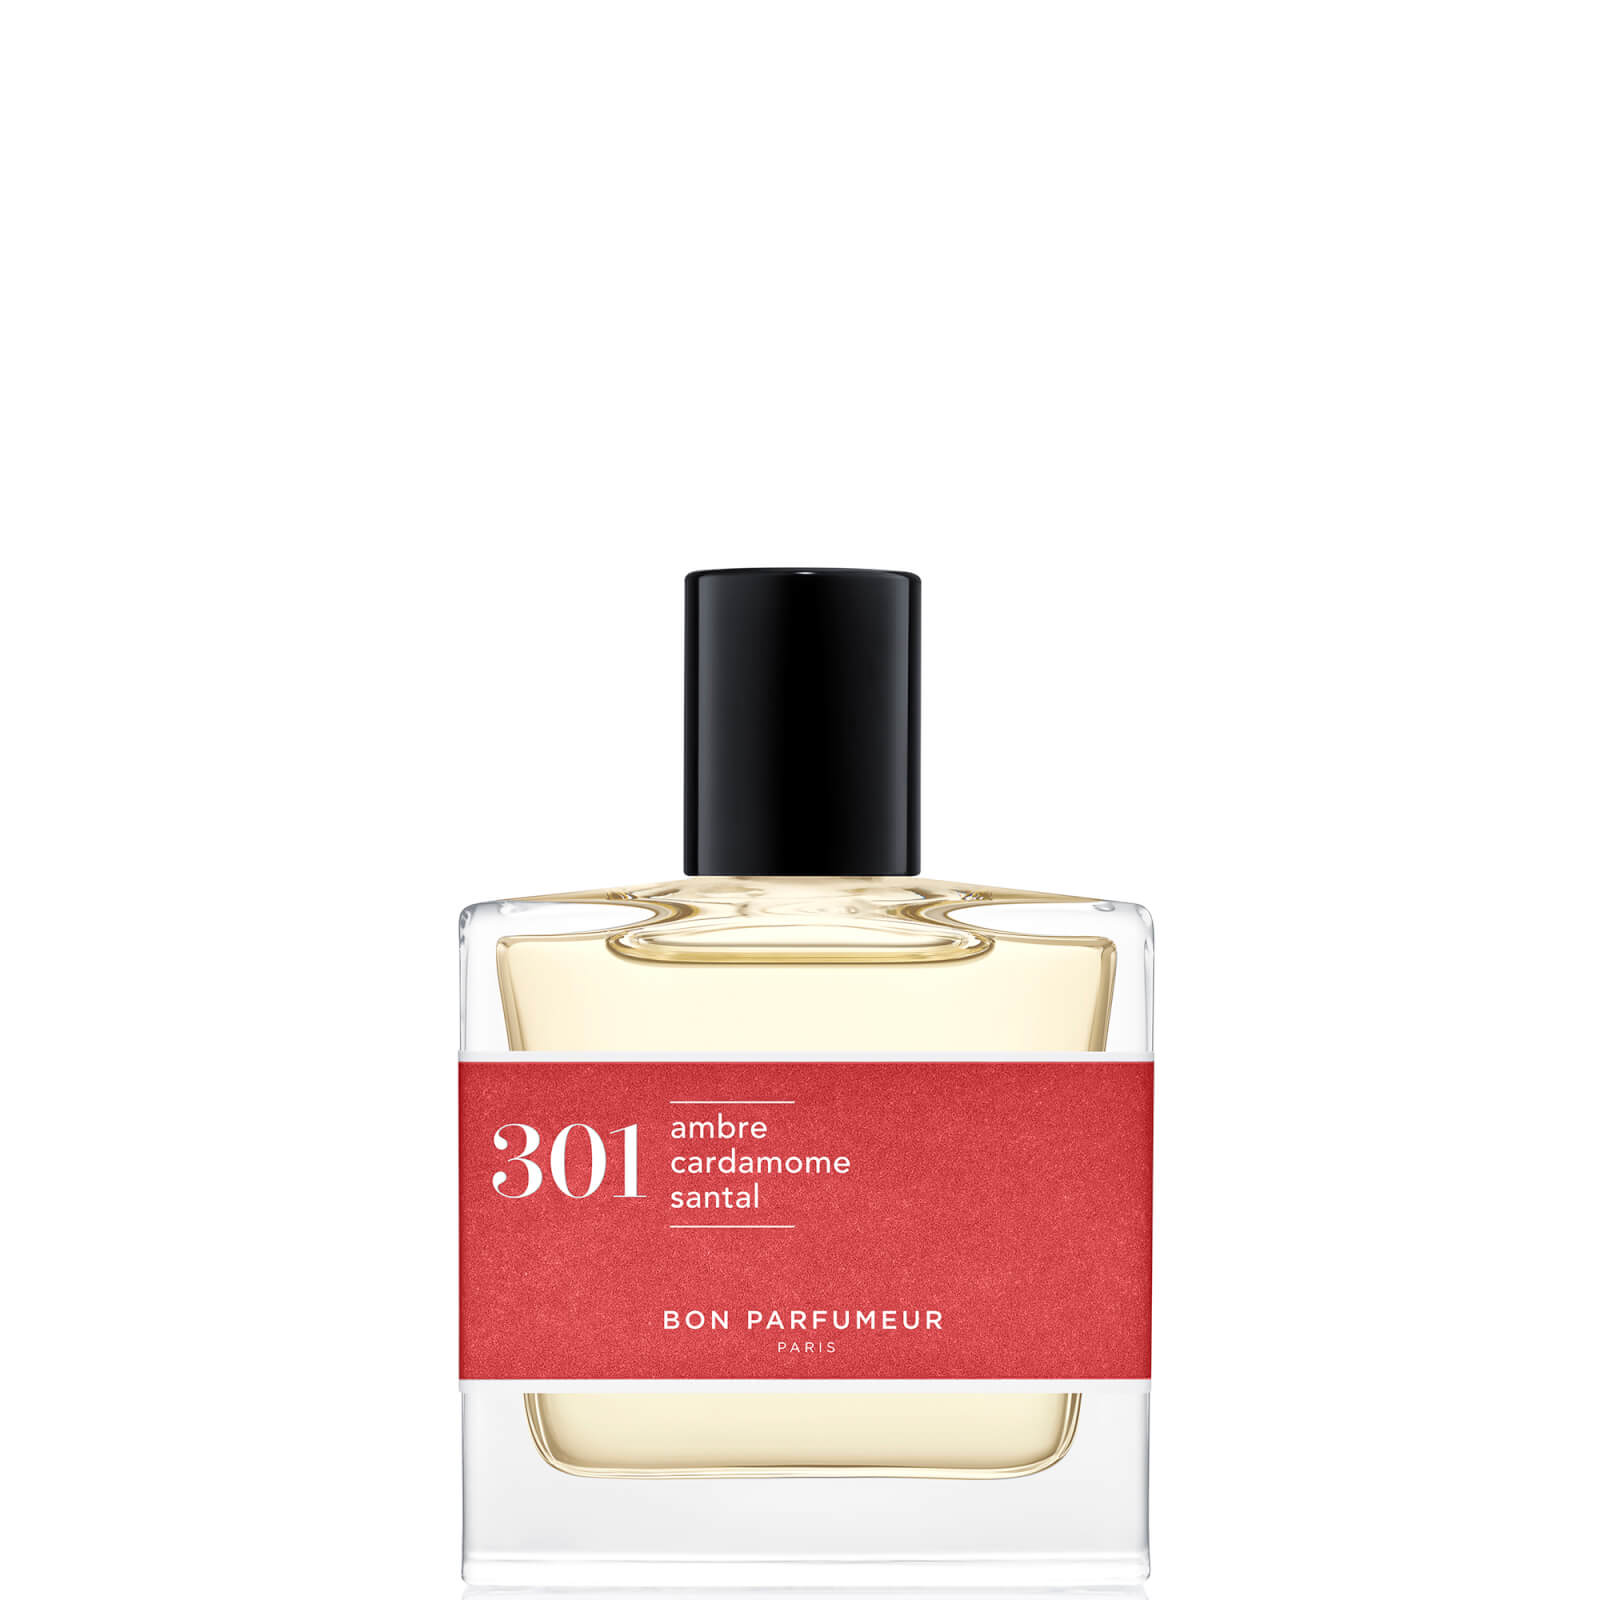 Image of Bon Parfumeur 301 Sandalo Ambra Cardamomo Eau de Parfum Profumo - 30ml